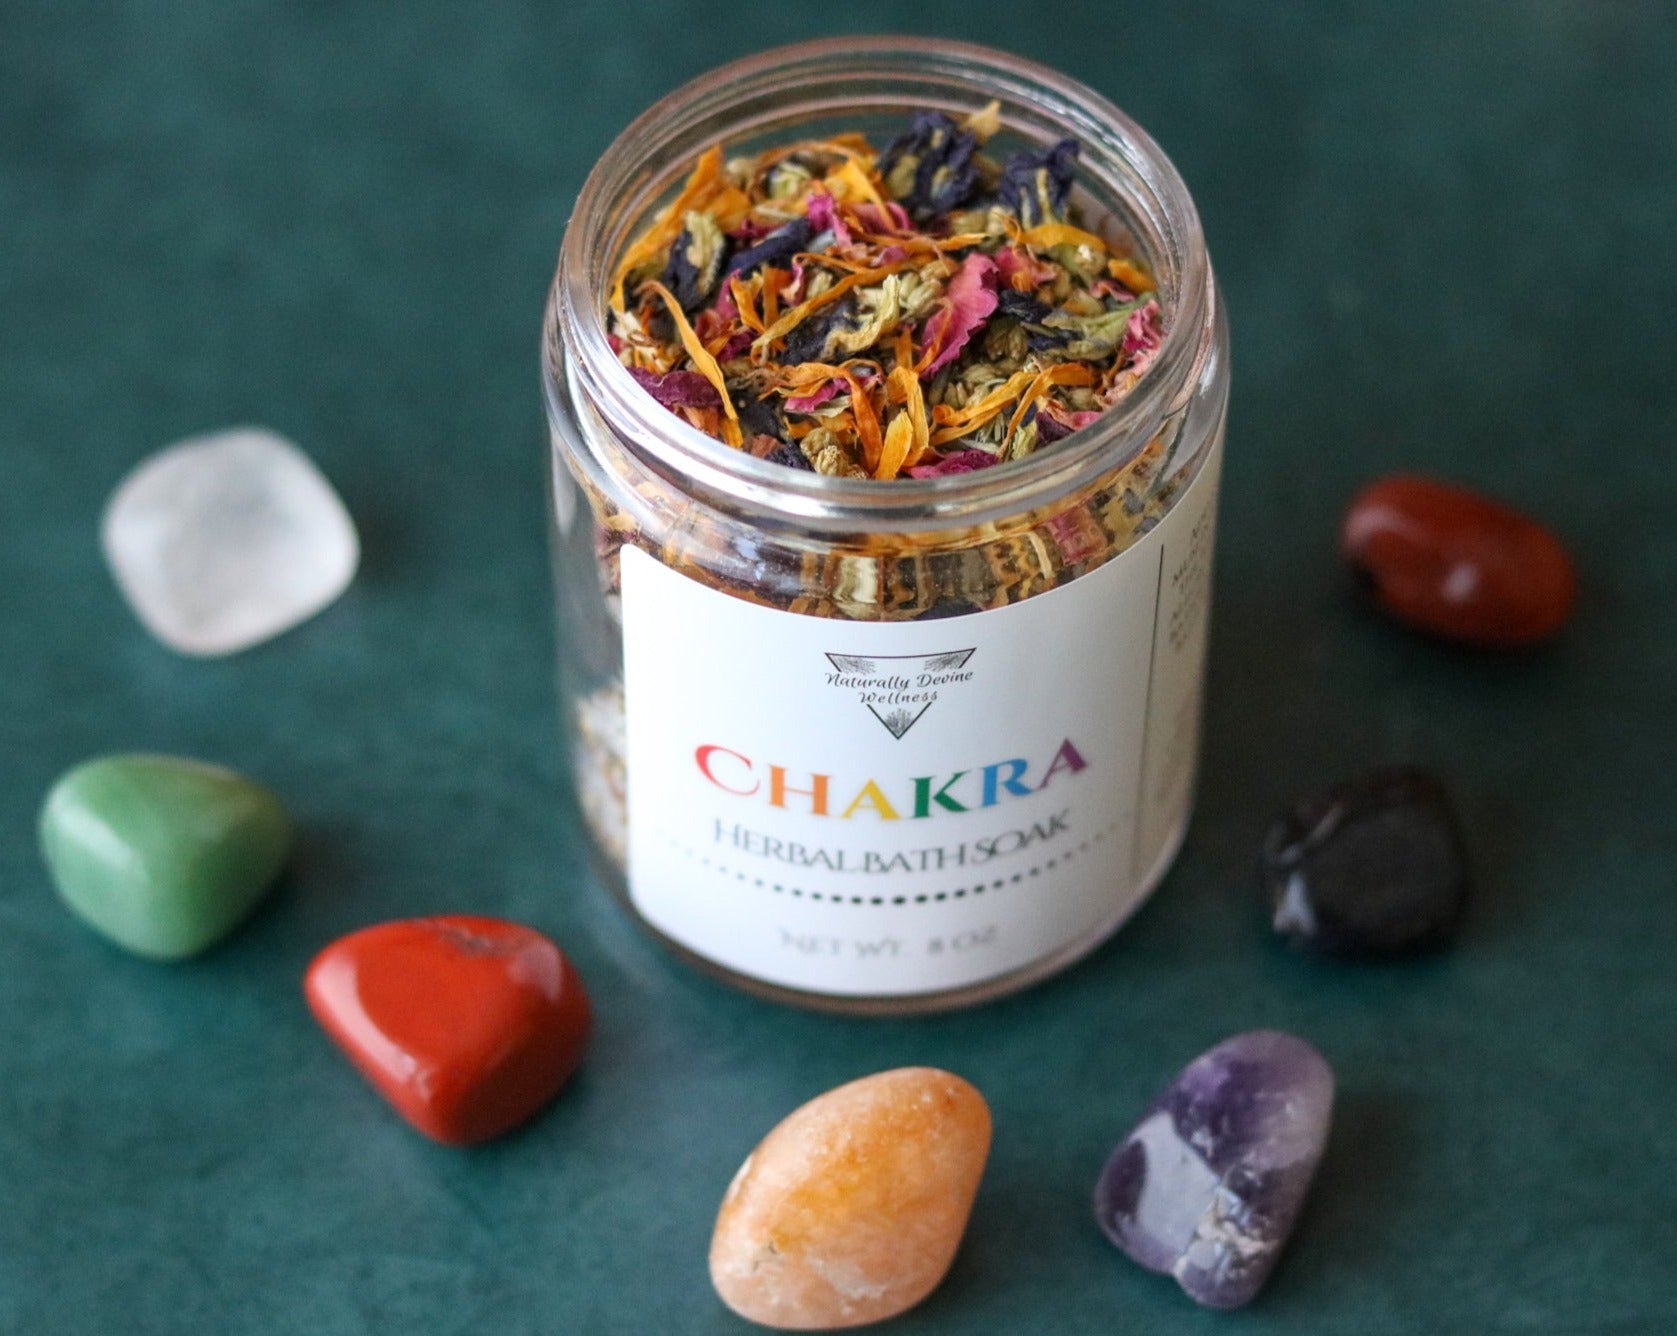 Chakra Bath Soak - Naturally Devine Wellness